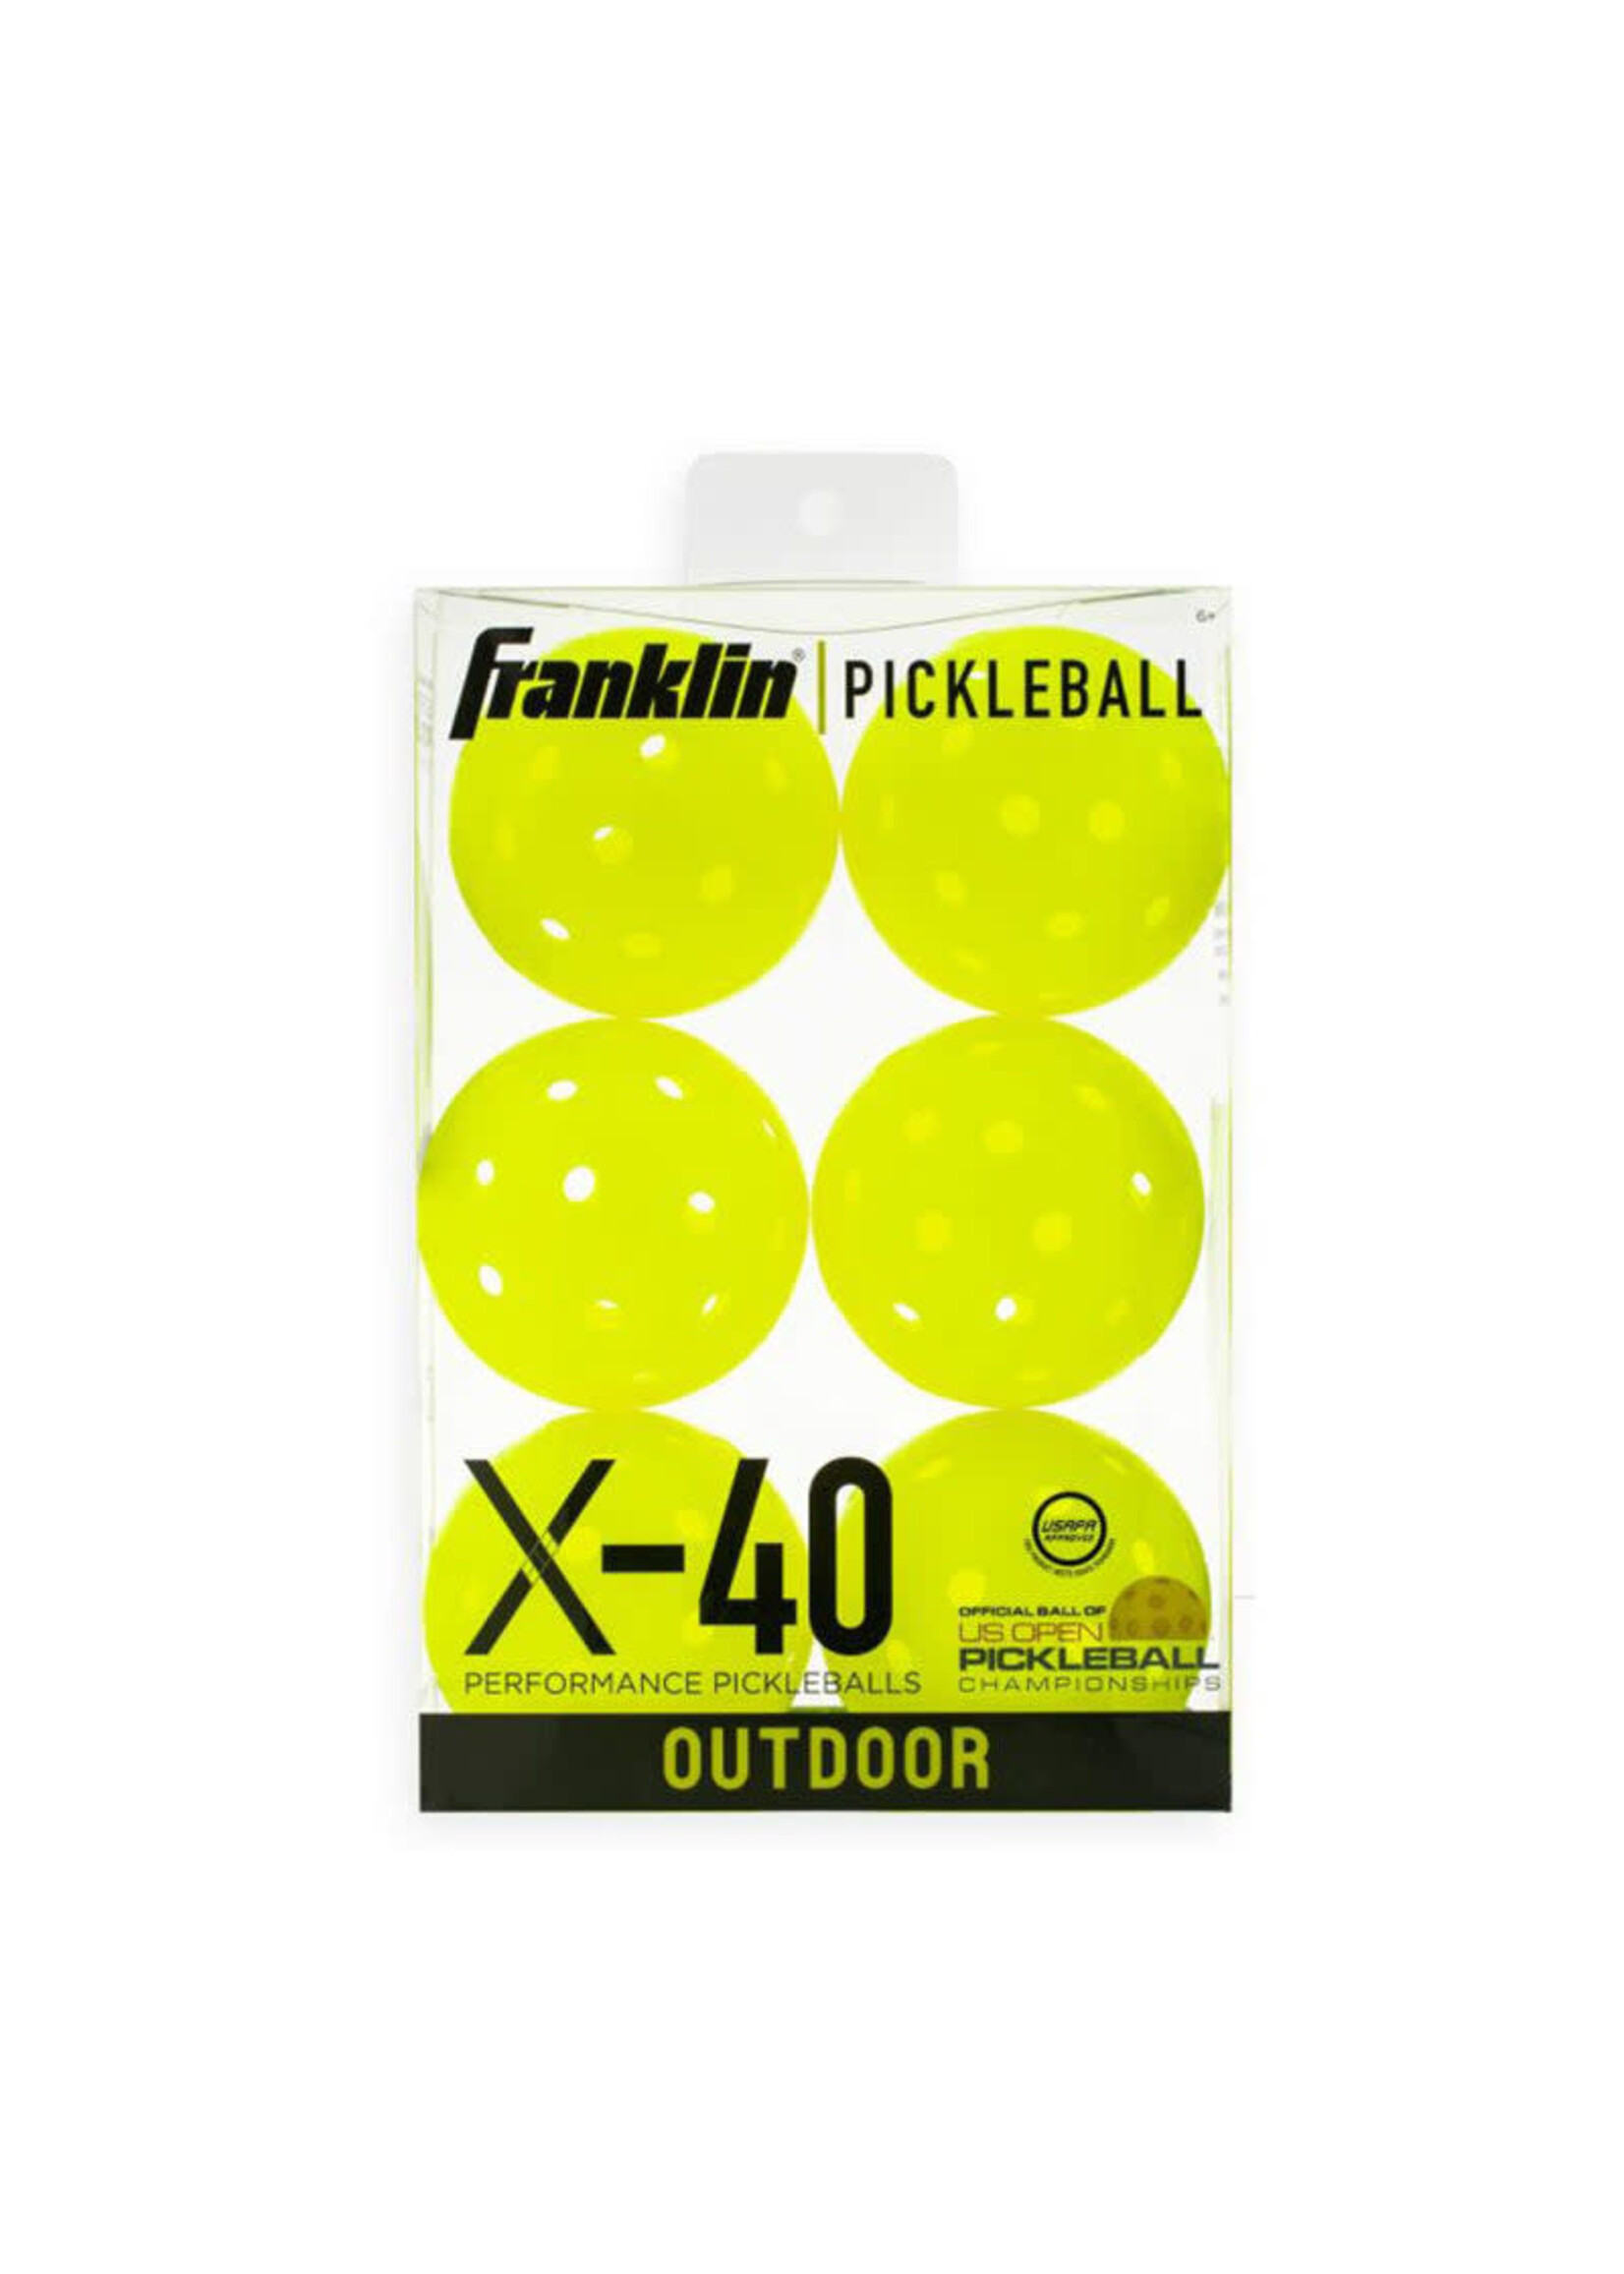 FRANKLIN BALLES PICKLEBALLX-40 EXTERIEUR PAQUET DE 6 OPTIC